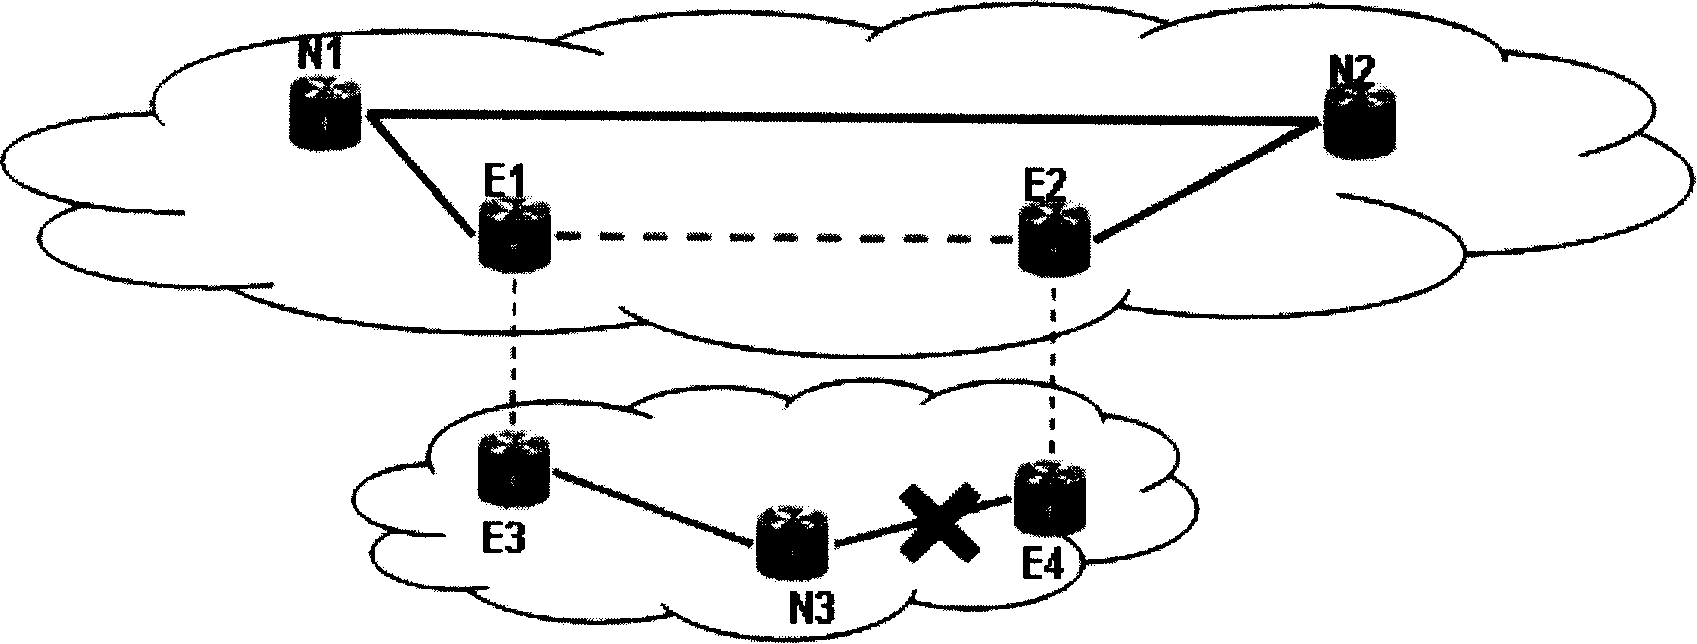 Service path calculating method